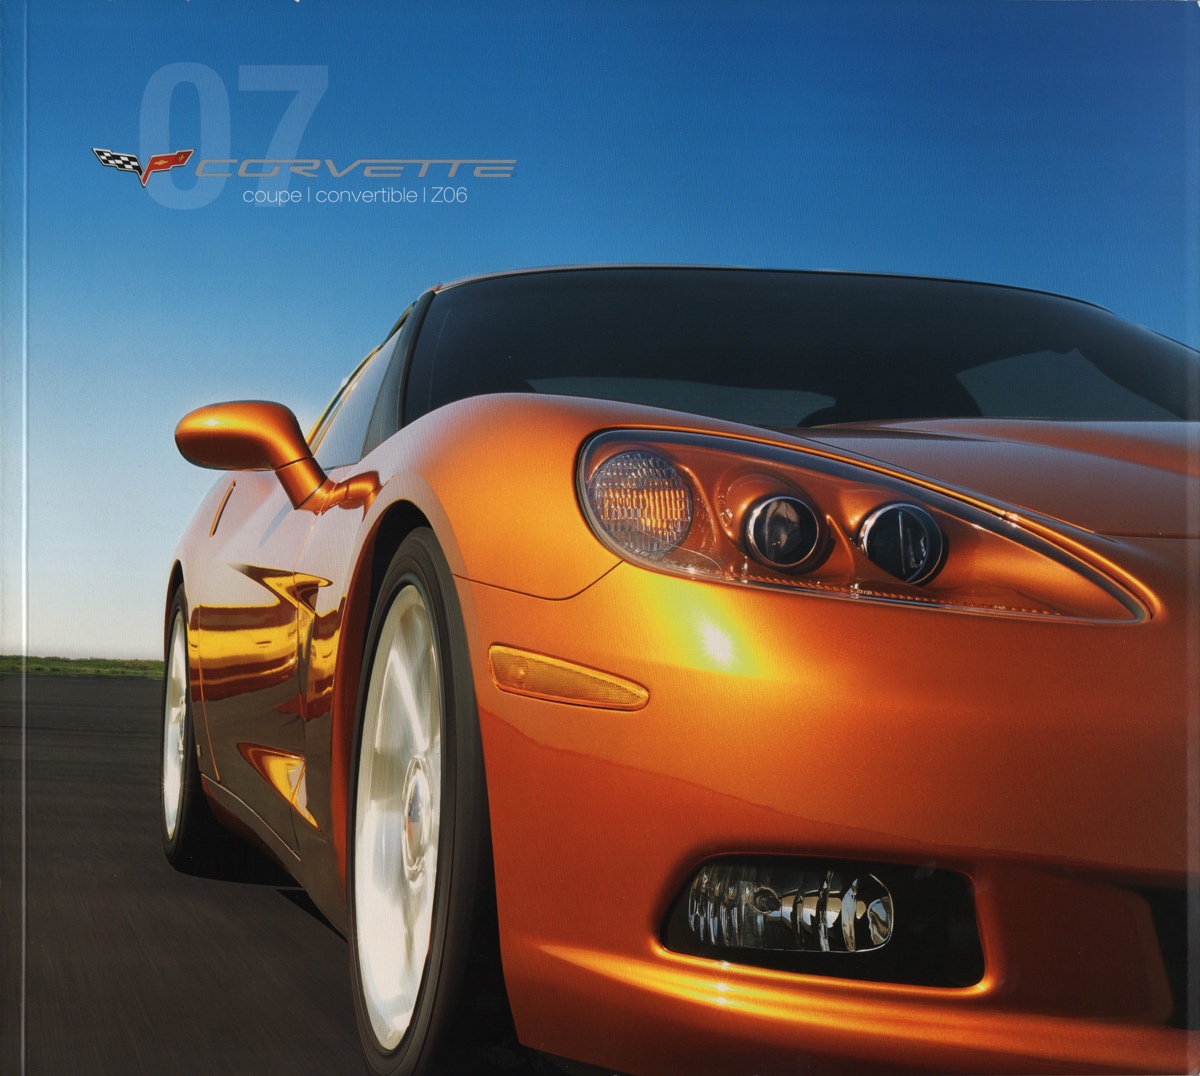 2007 Corvette Sales Brochure